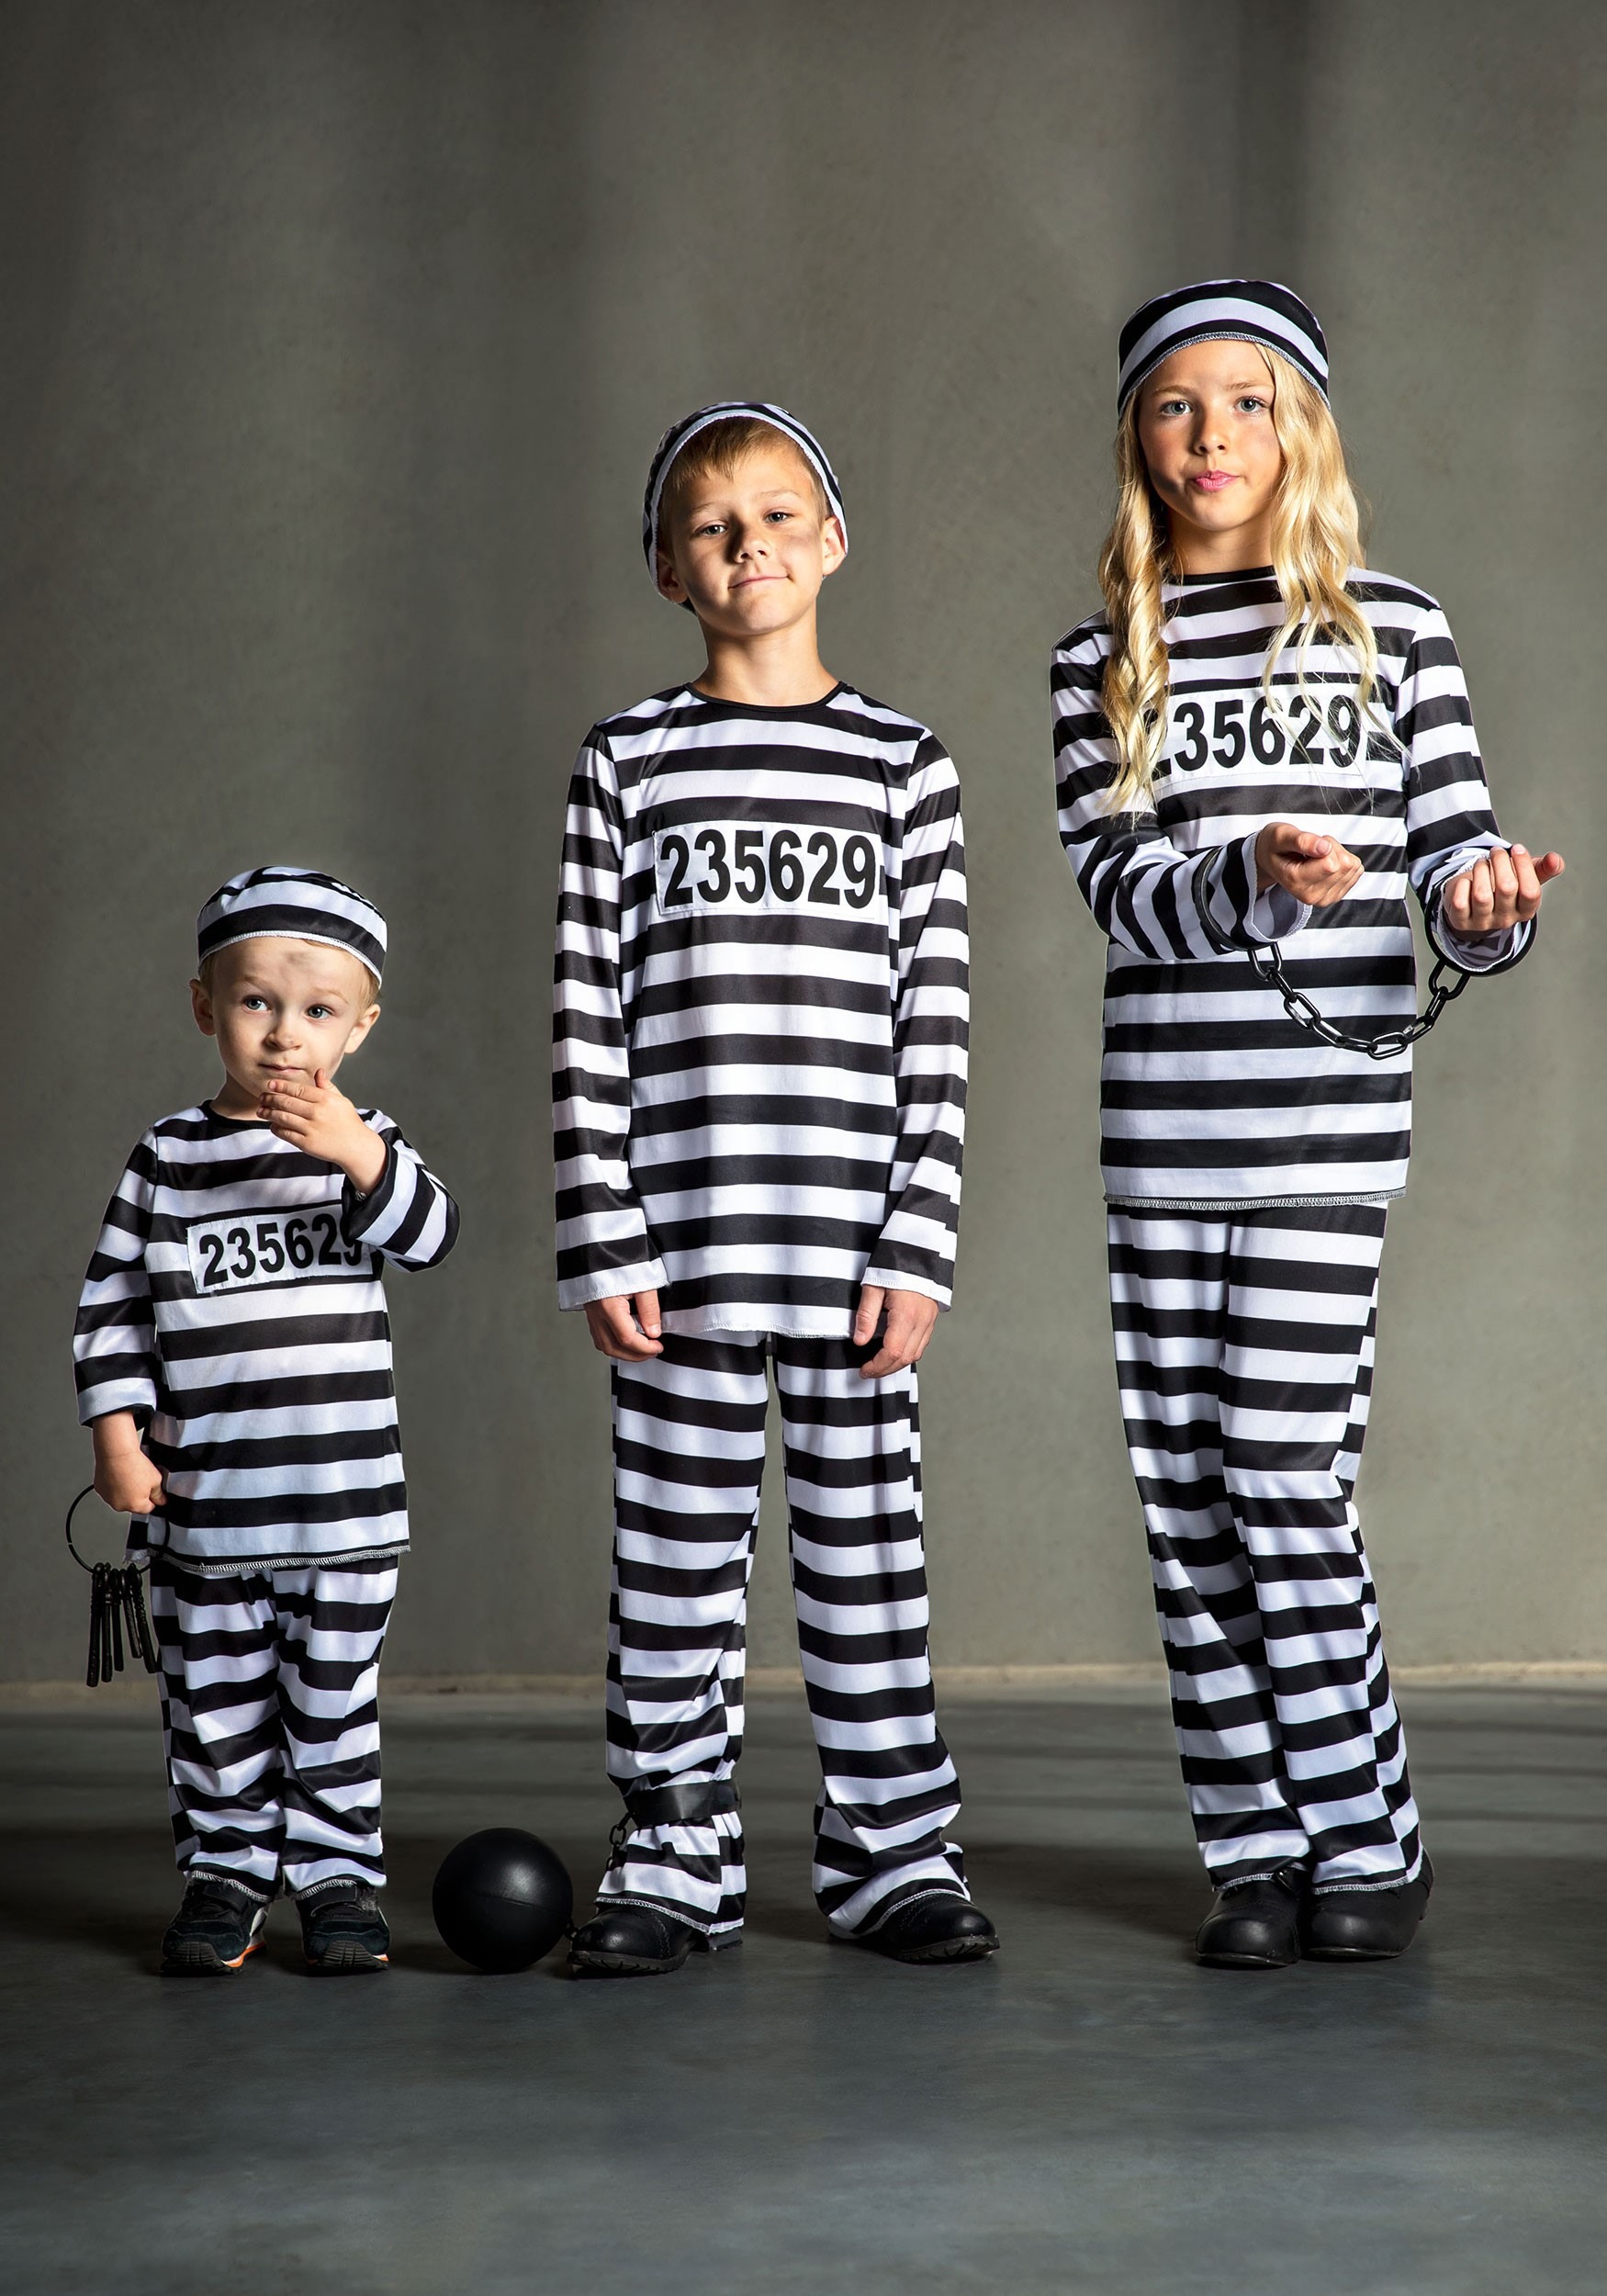 PRISONER BOY JAIL GAOL CONVICT BOYS GIRLS CHILD FANCY DRESS UP HALLOWEEN COSTUME